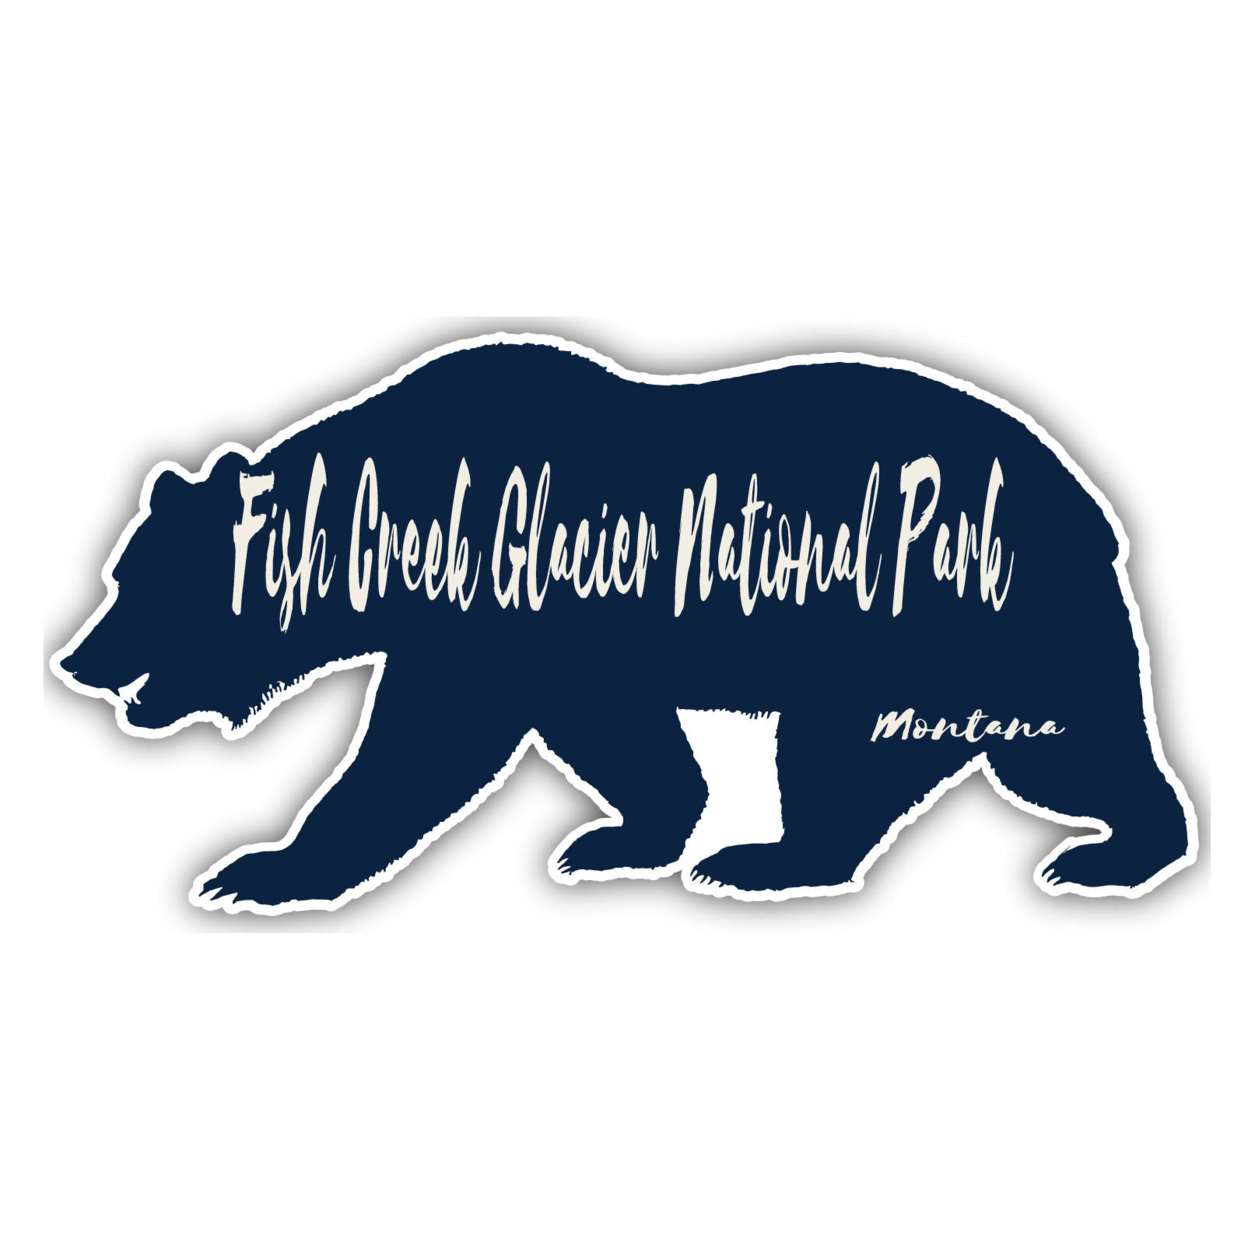 Fish Creek Glacier National Park Montana Souvenir Decorative Stickers (Choose Theme And Size) - 4-Pack, 12-Inch, Bear